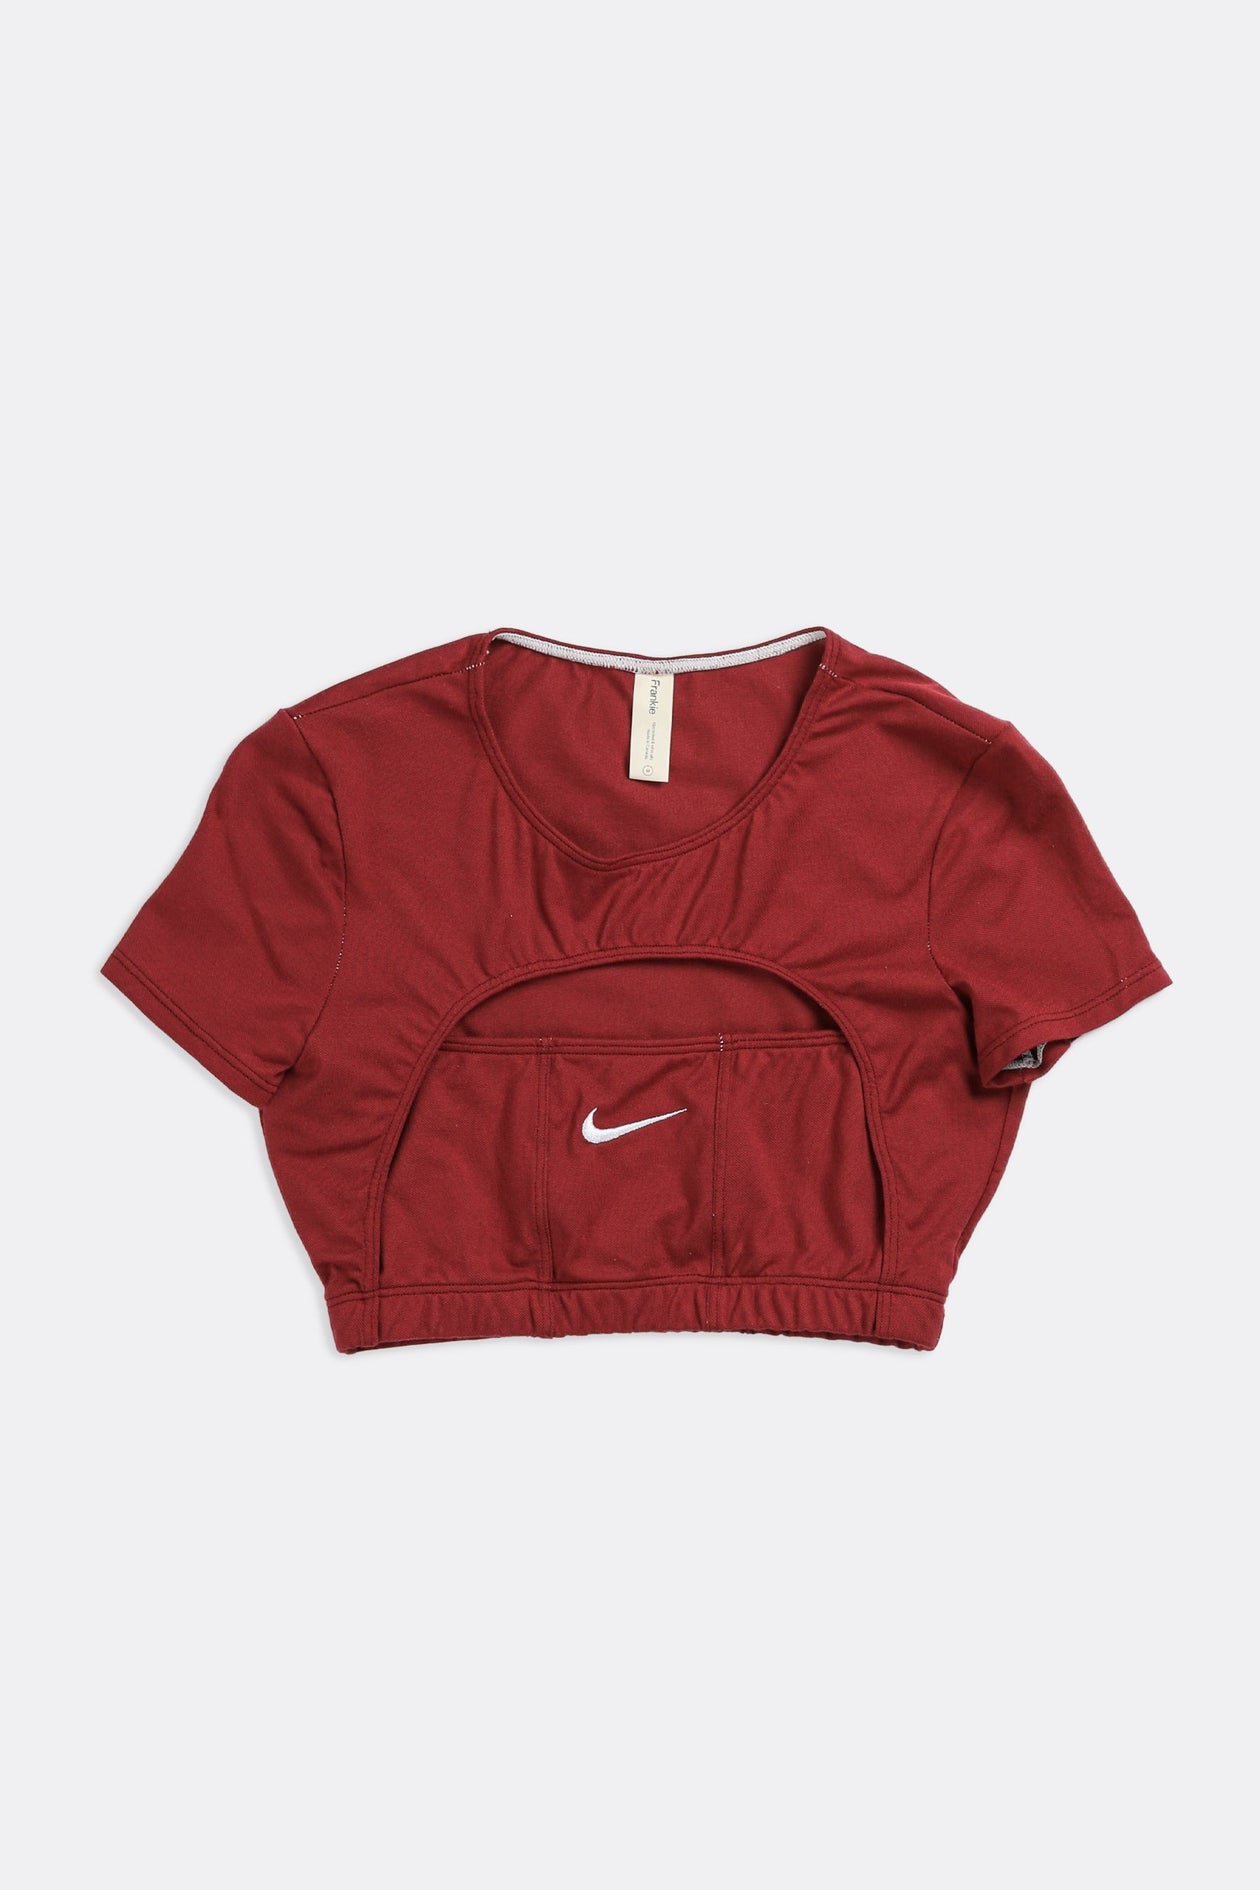 Rework Nike Sweatshirt Bustier - XS, S, M, L, XL, 2XL – Frankie Collective